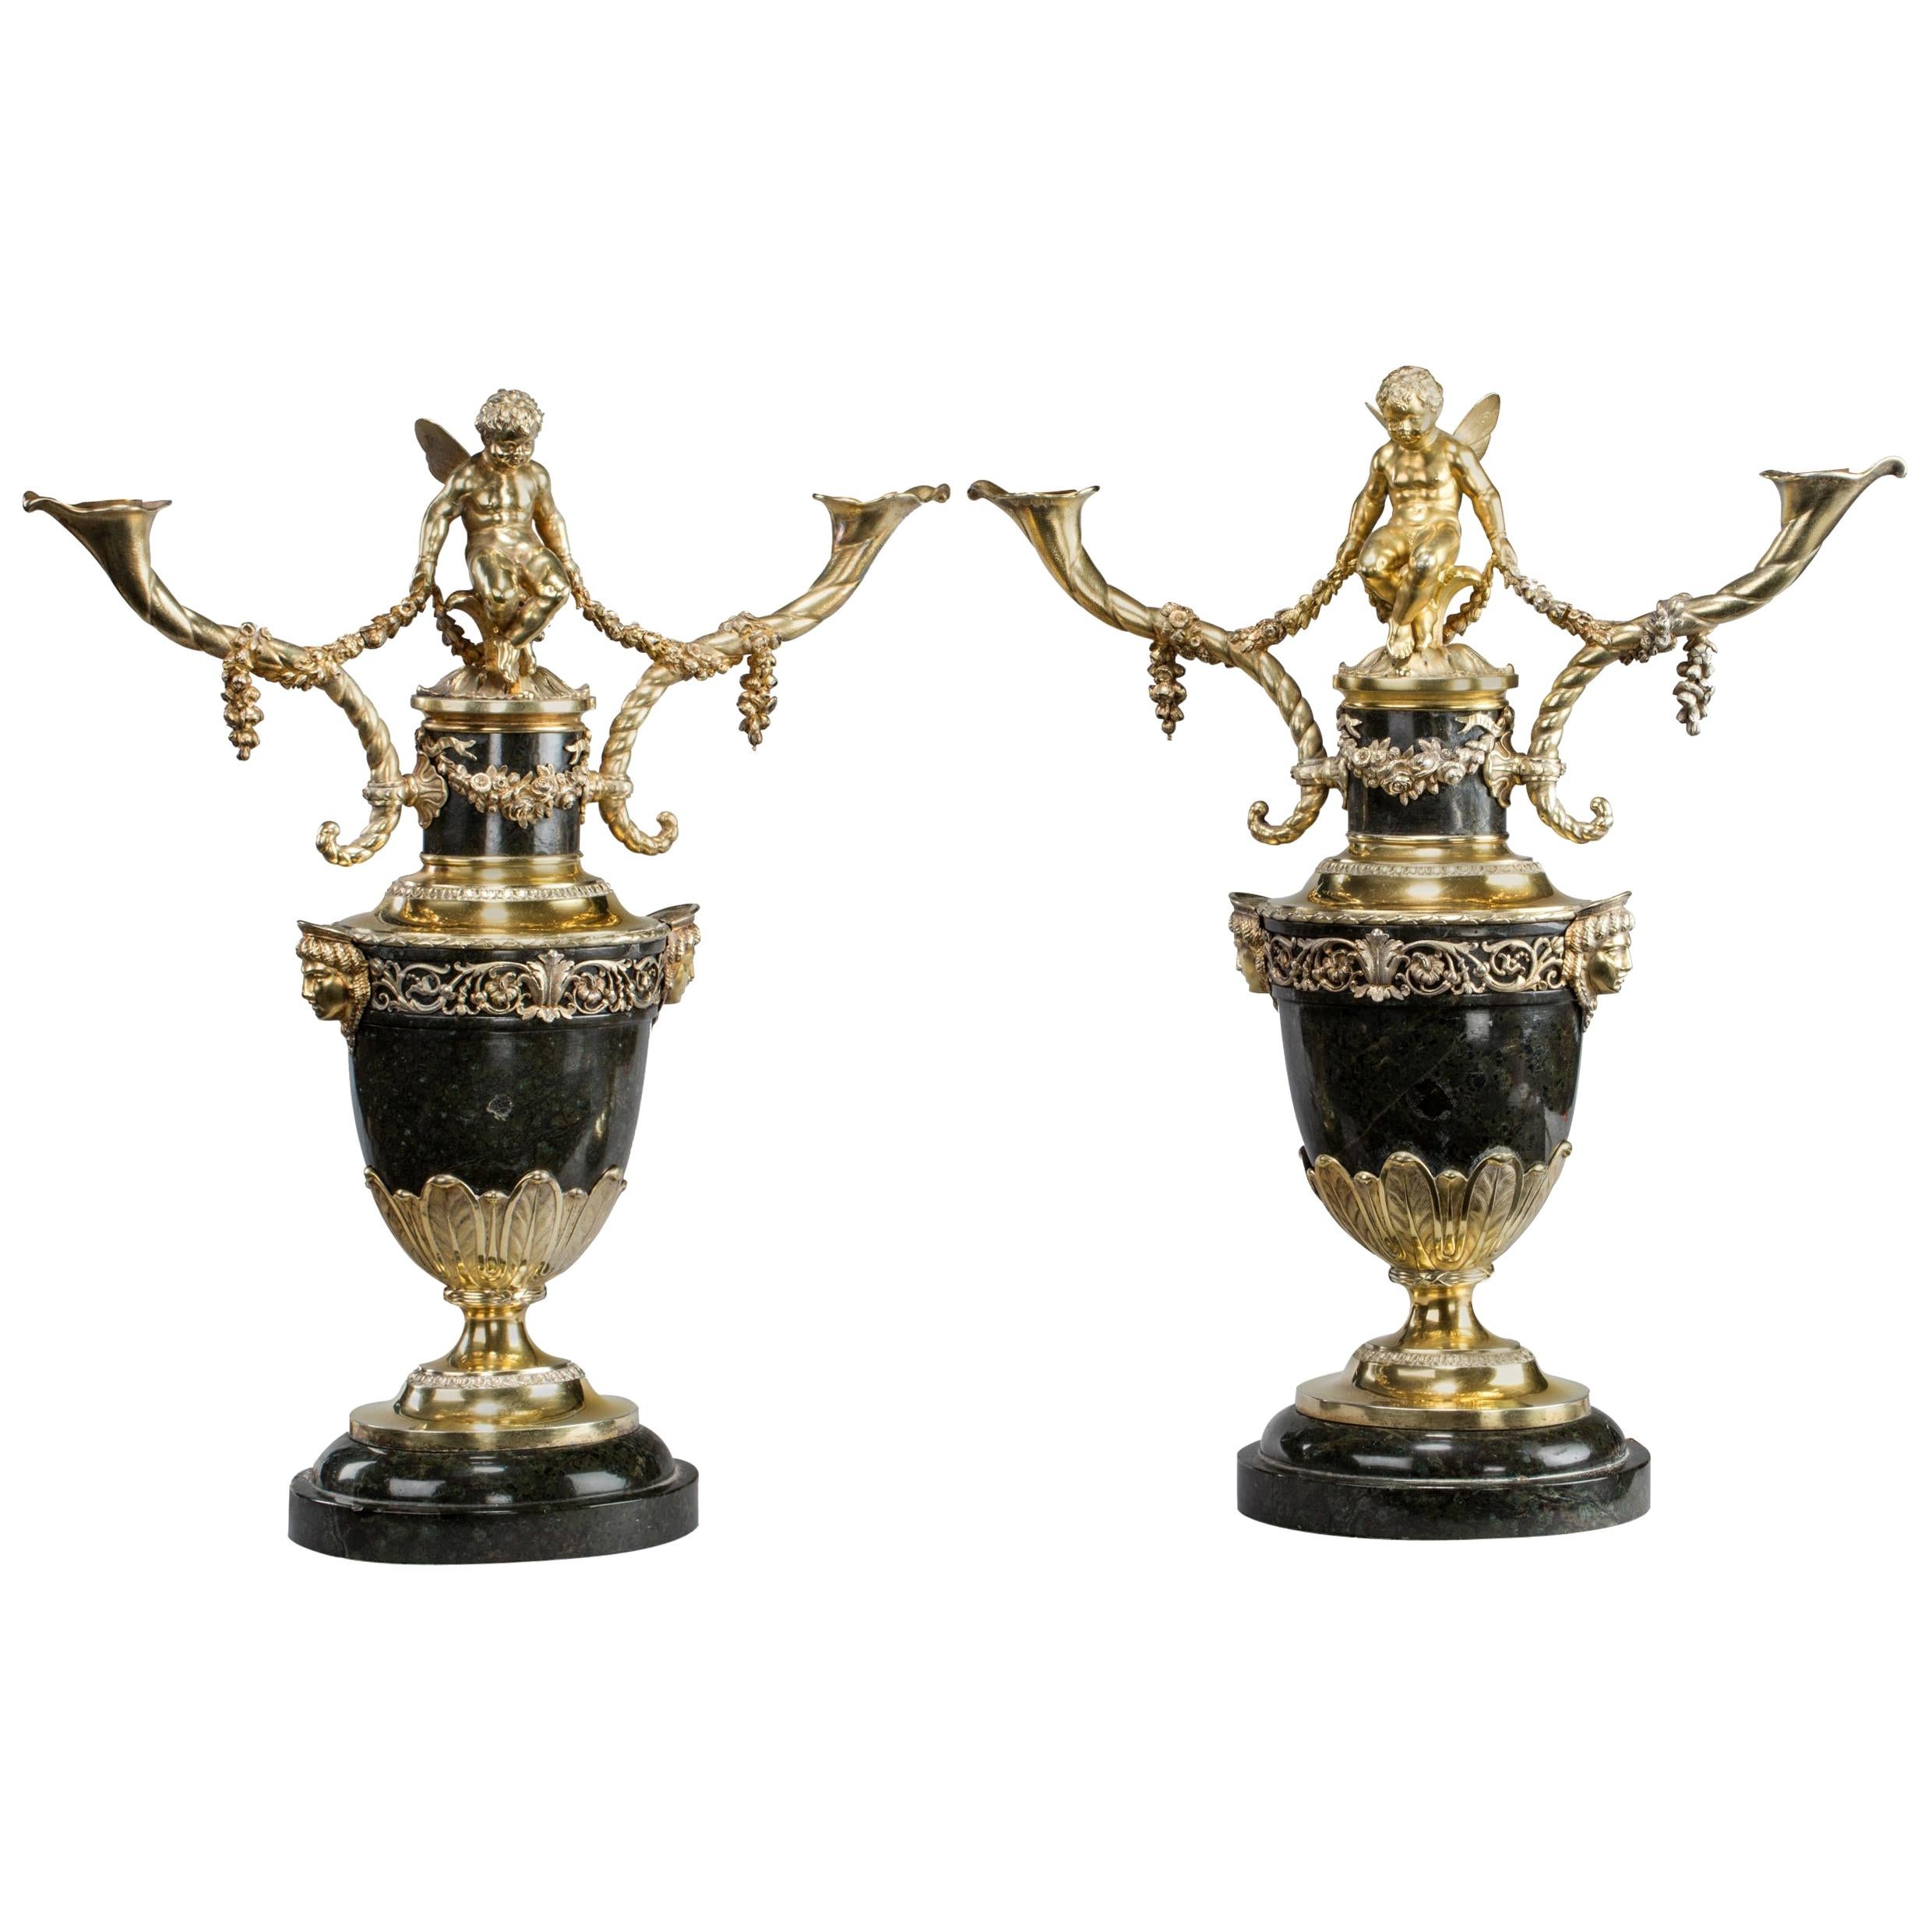 Hervorragendes Paar viktorianischer vergoldeter Silberkandelaber